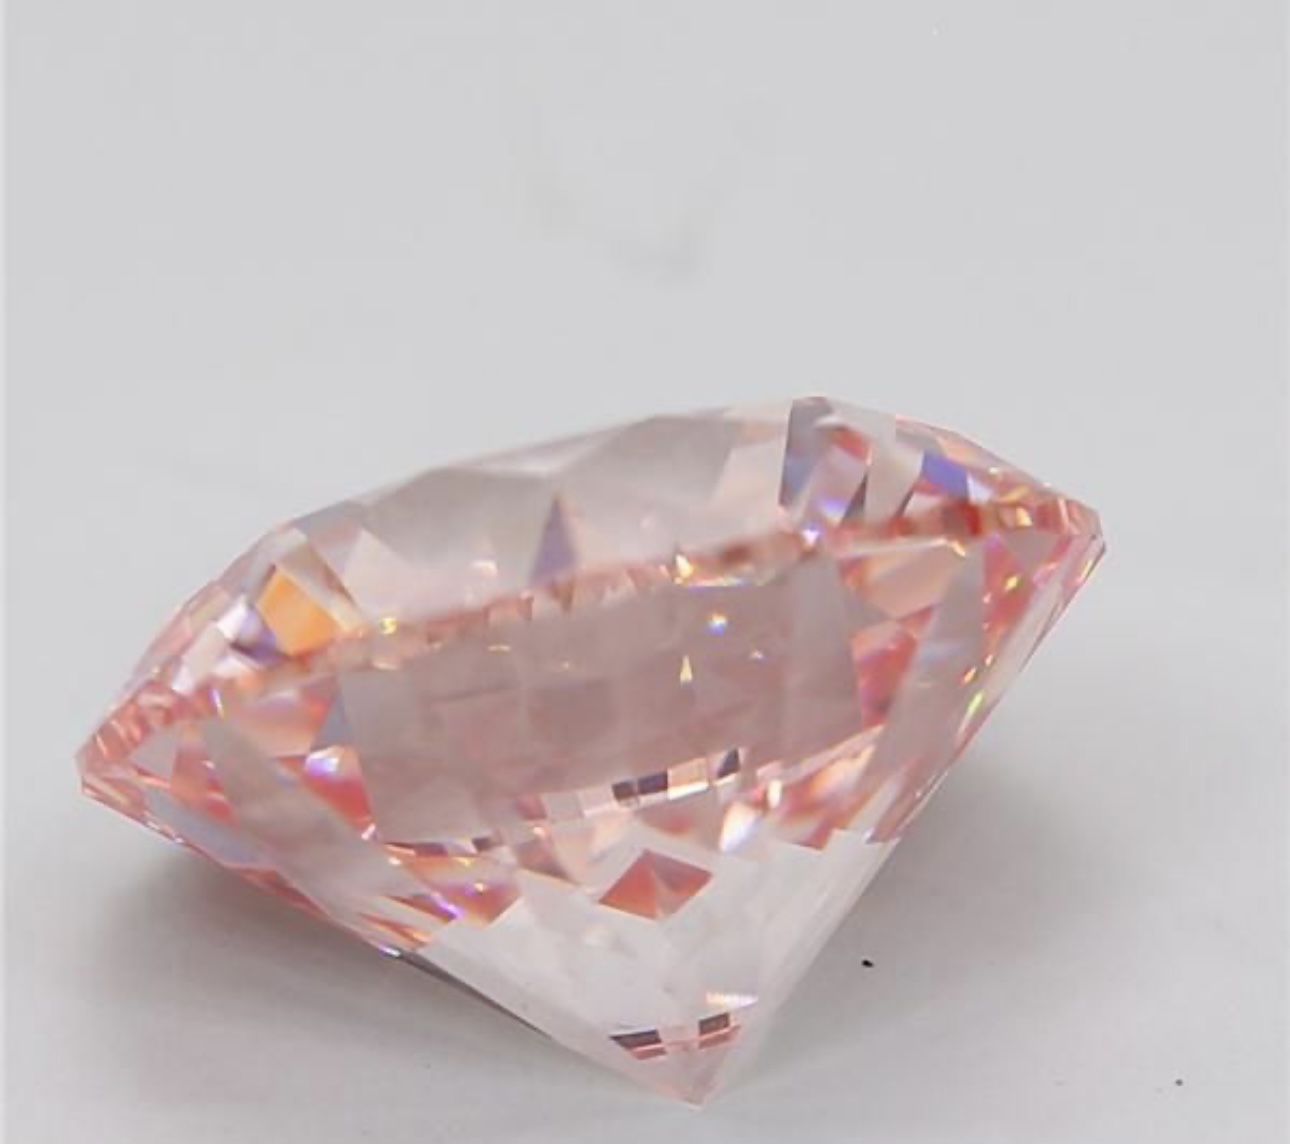 Round Brilliant Cut Diamond 7.42 Carat Fancy Pink Colour VS1 Clarity - IGI Certificate - Image 5 of 8